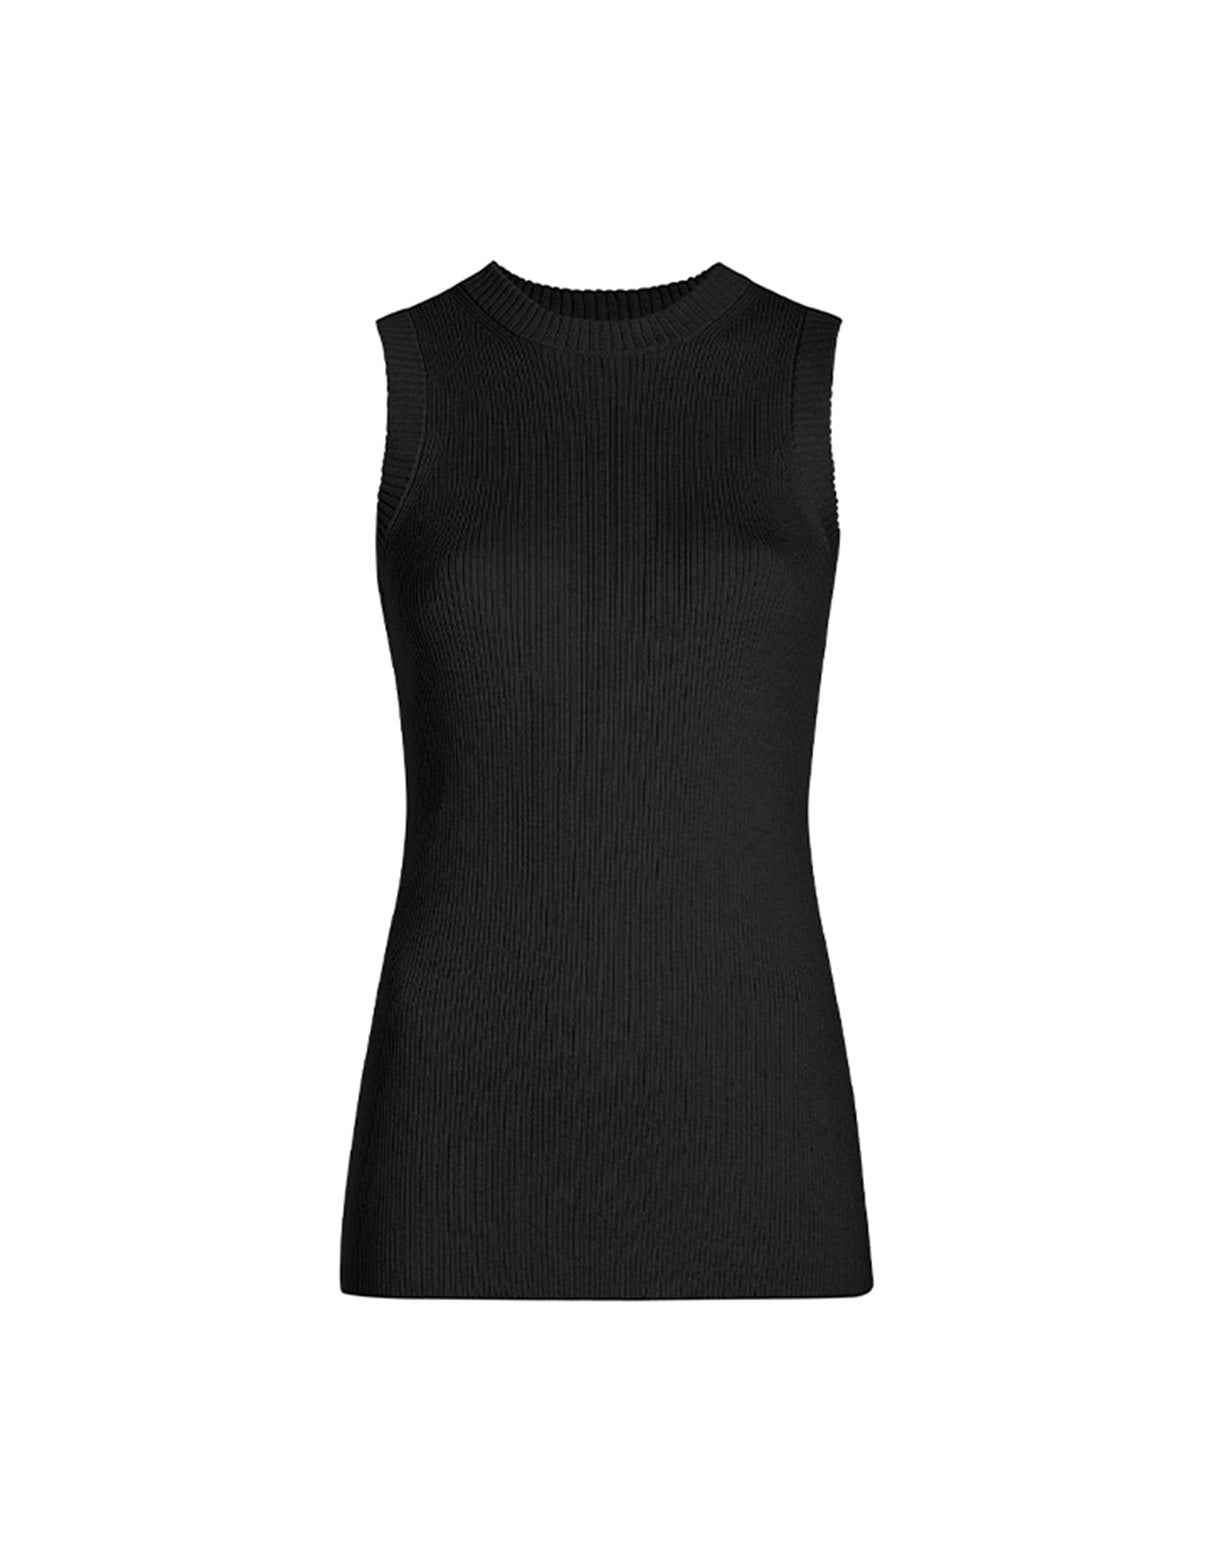 Rib Knit Tank Wool Blend Black Luxury Flattering Women's Designer Essential Top sleeveless crew neck shirt